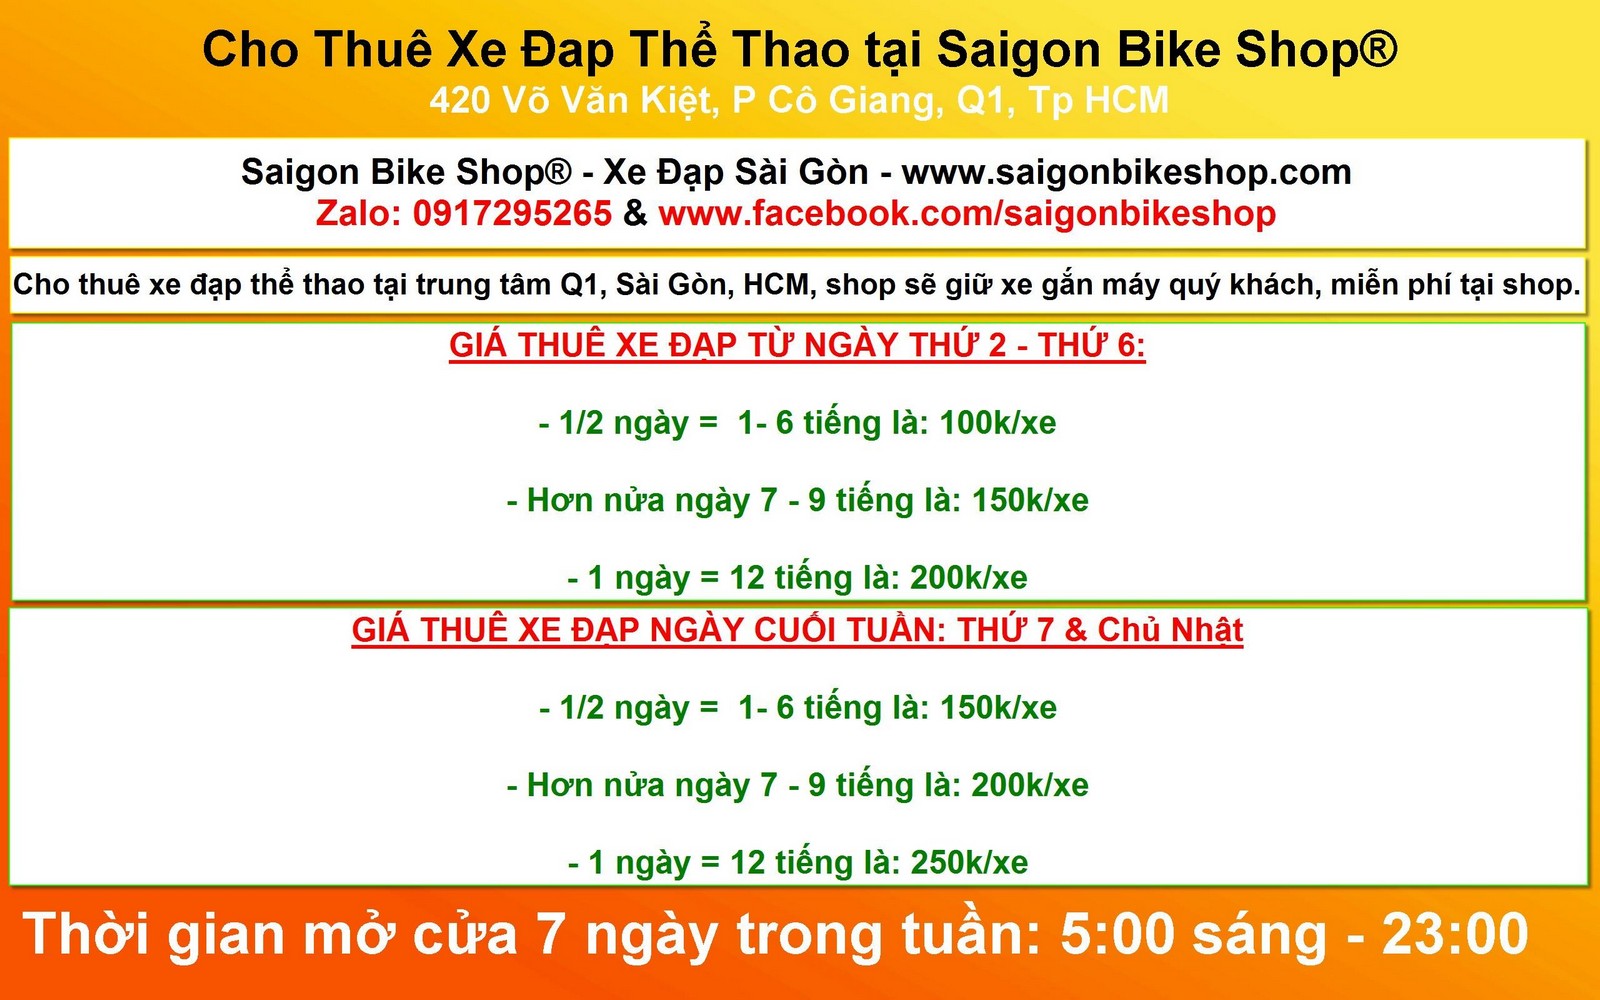 bike forent in Ho Chi Minh